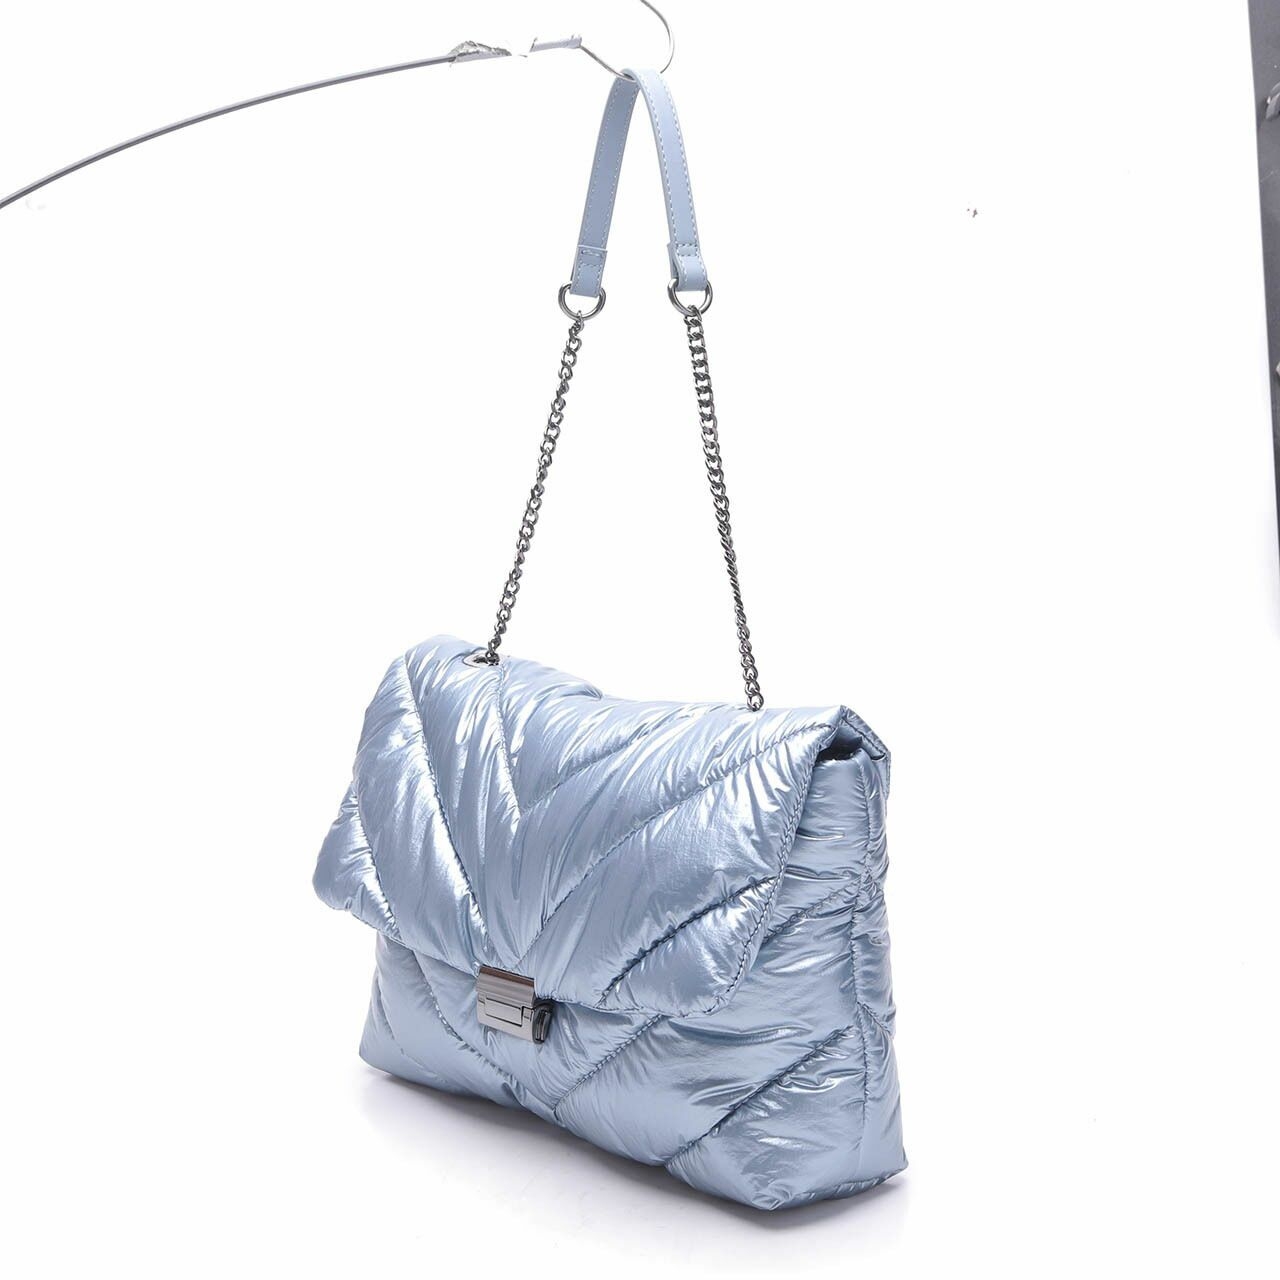 Zara Blue Metallic Shoulder Bag